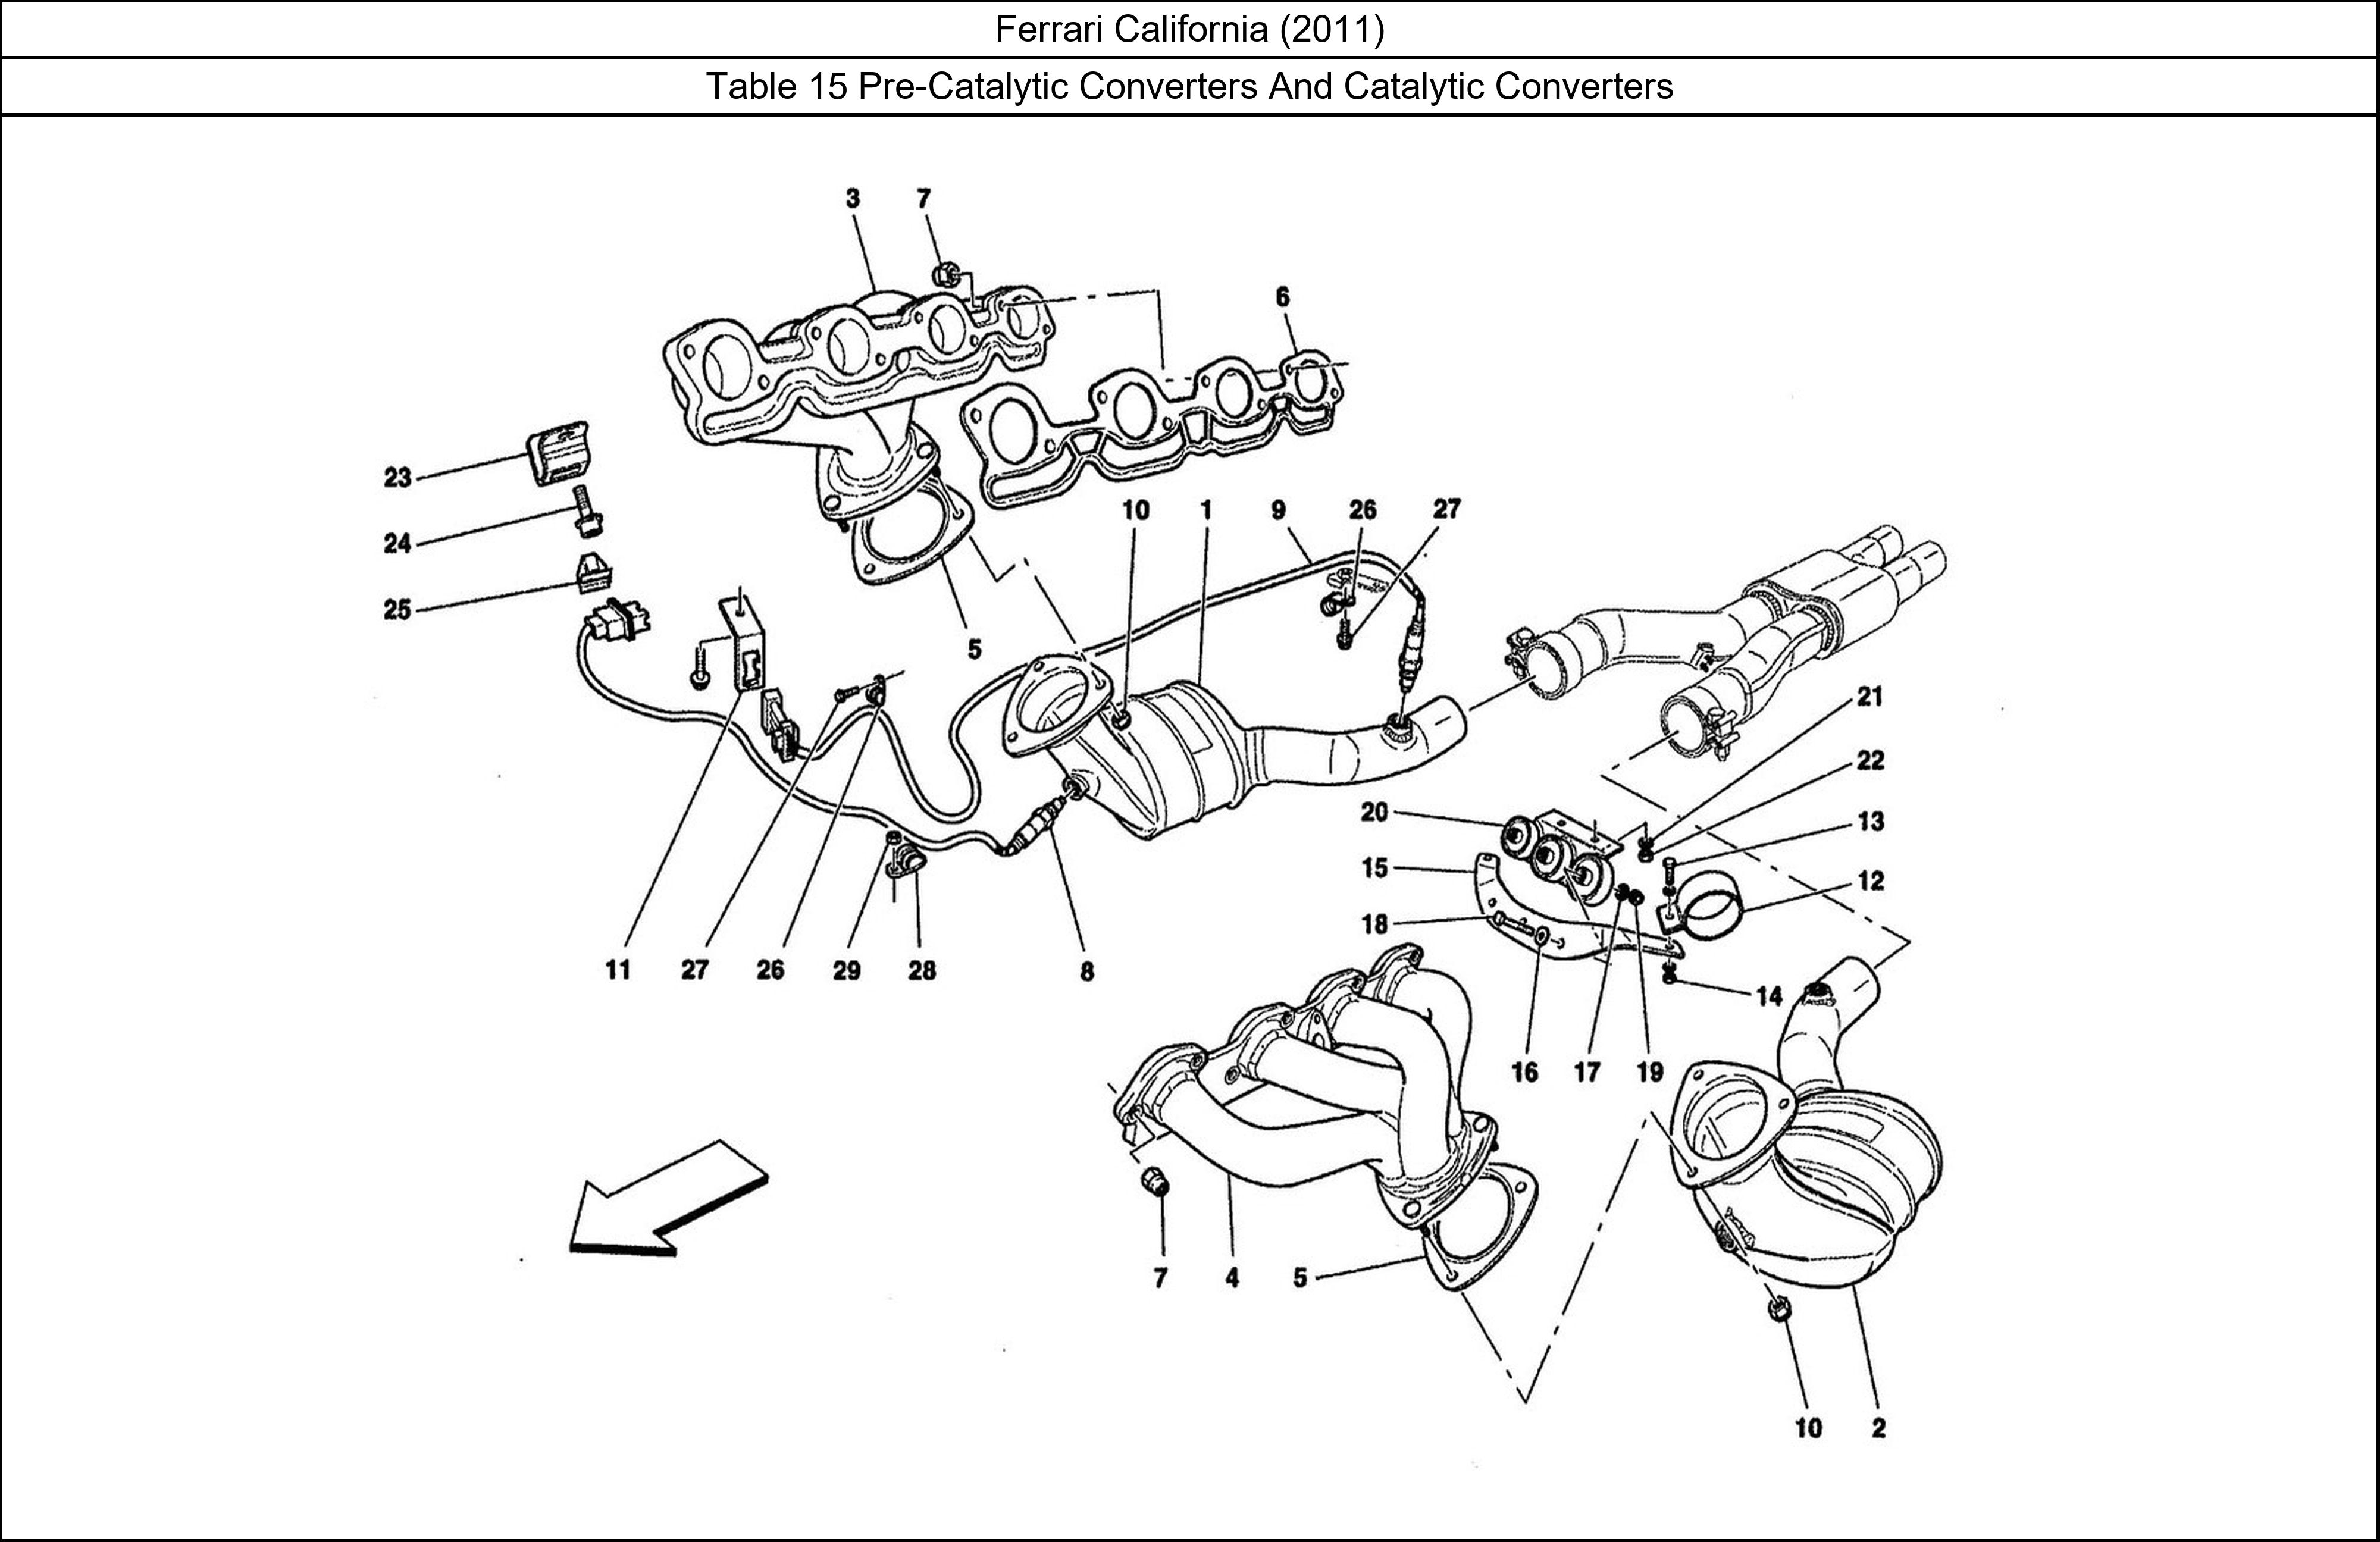 Ferrari Parts Ferrari California (2011) Table 15 Pre-Catalytic Converters And Catalytic Converters